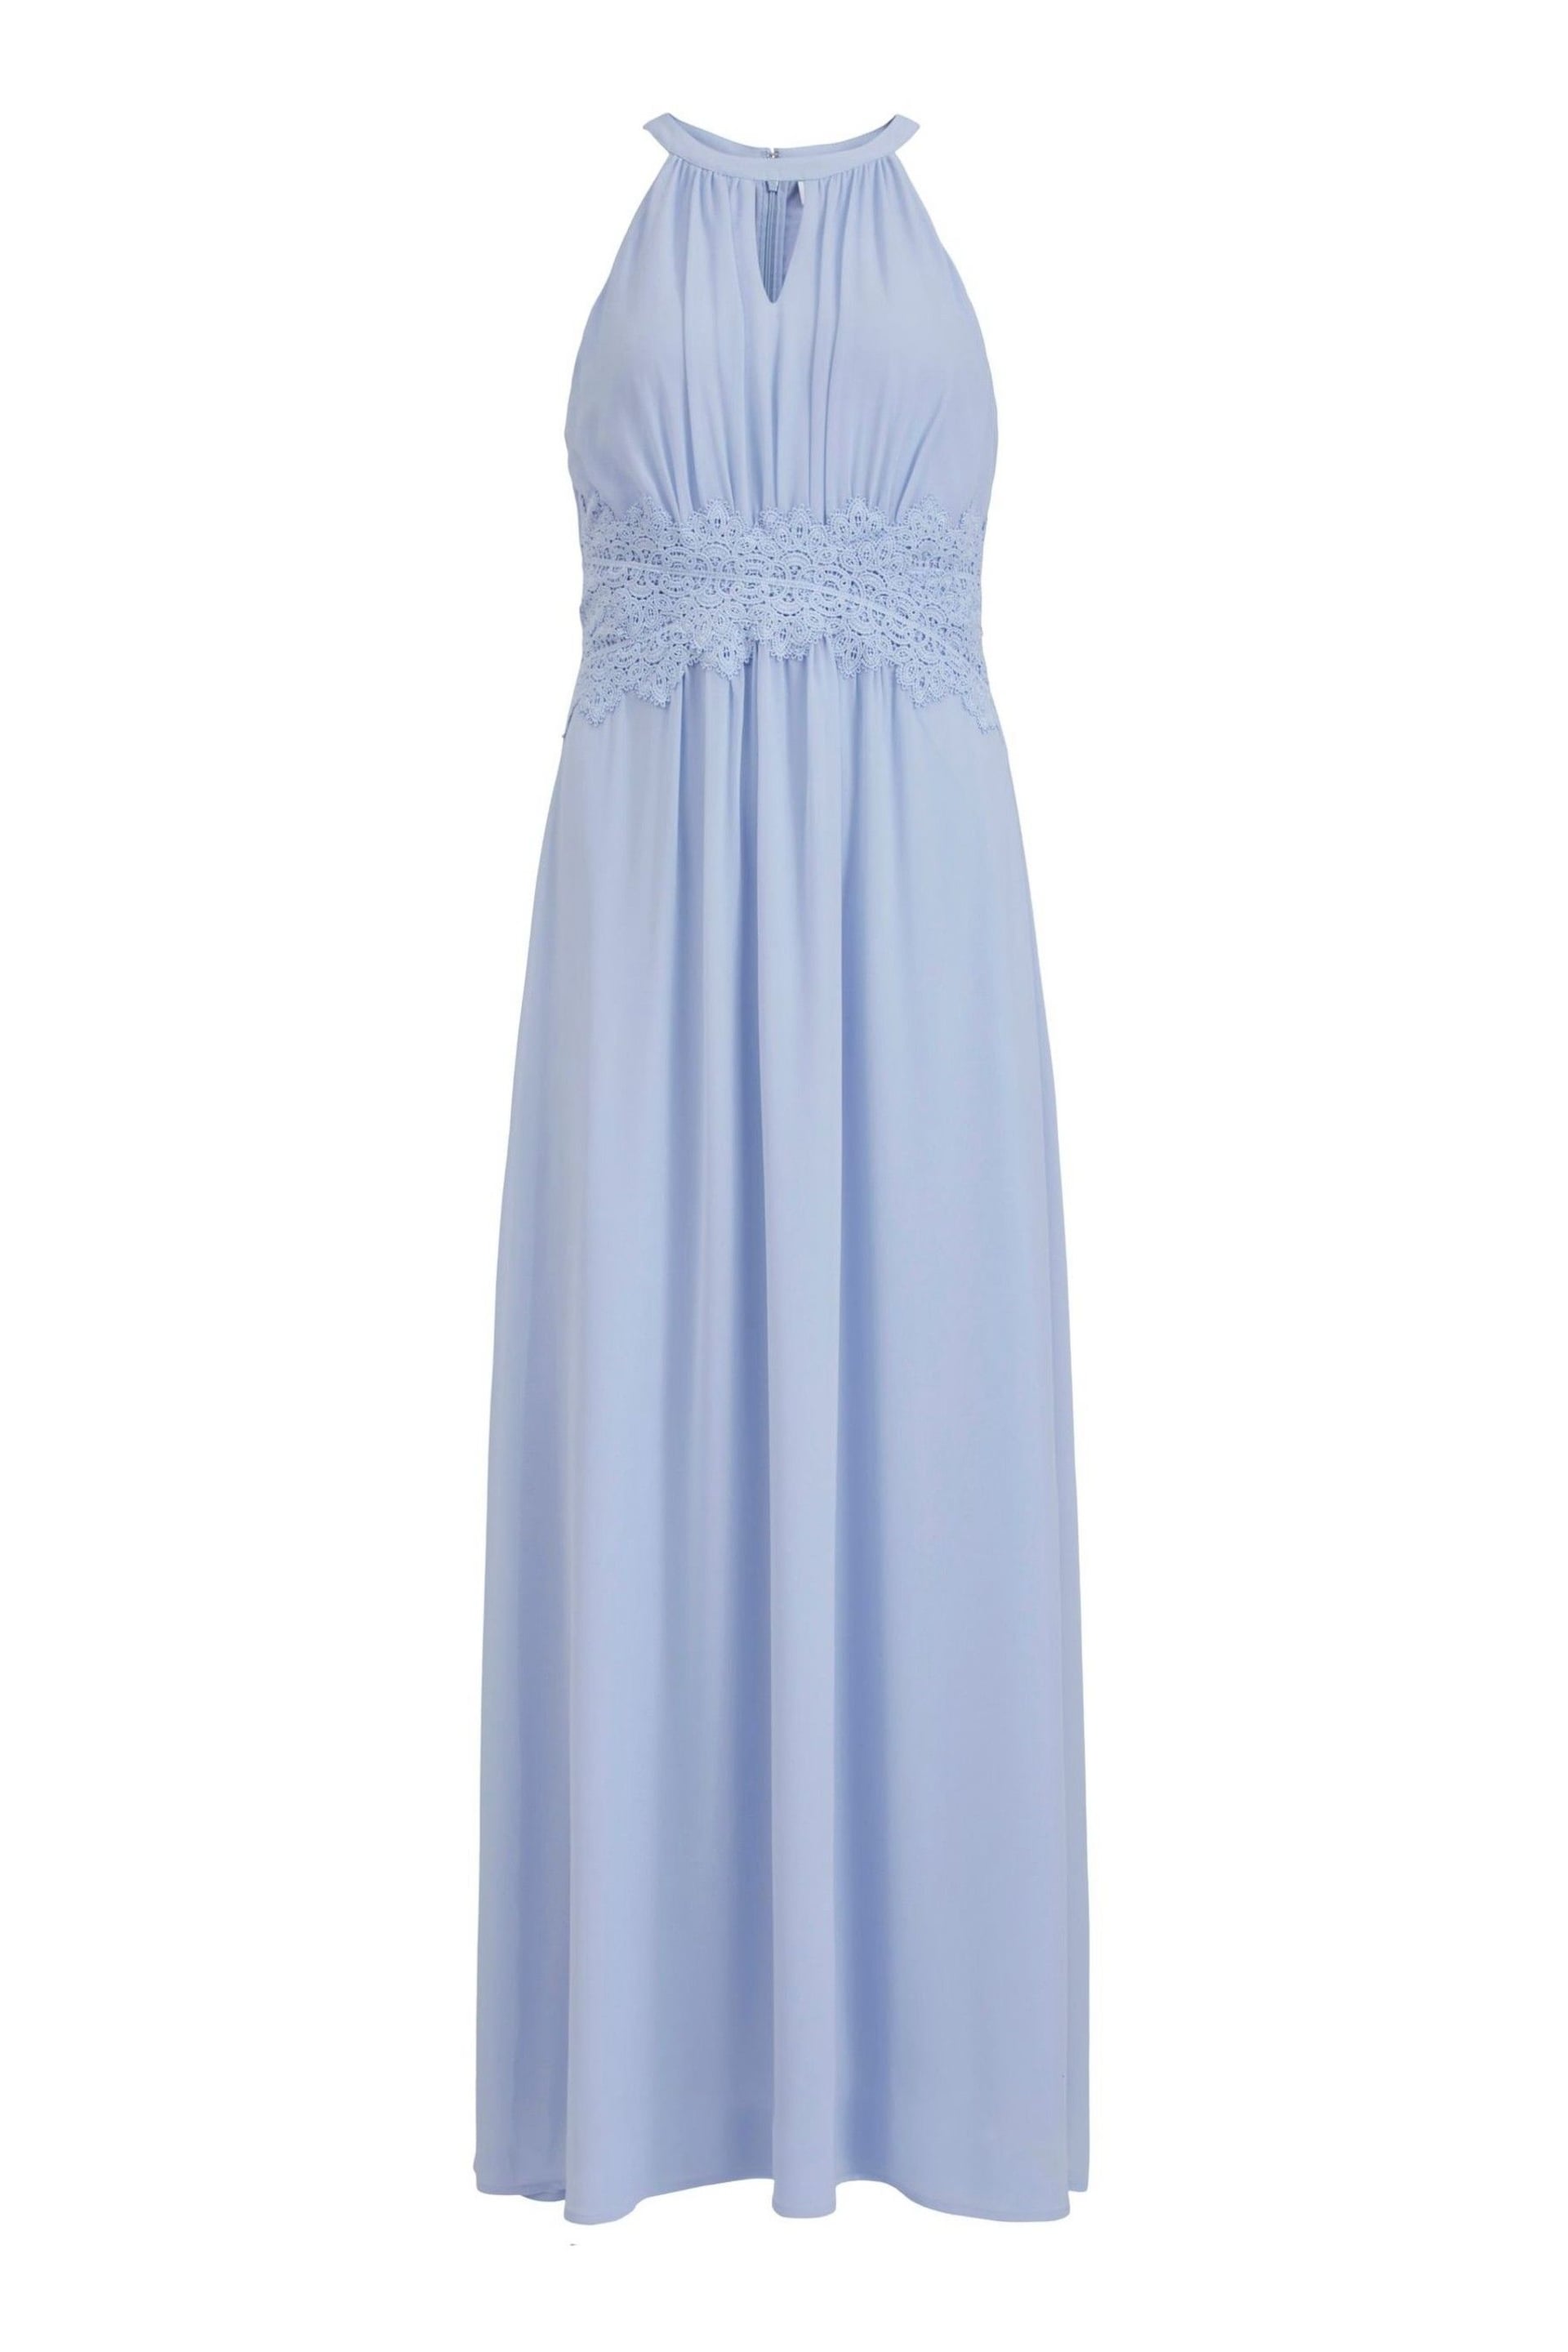 Vila Light Blue Halter Neck Tulle Maxi Dress - Image 5 of 5